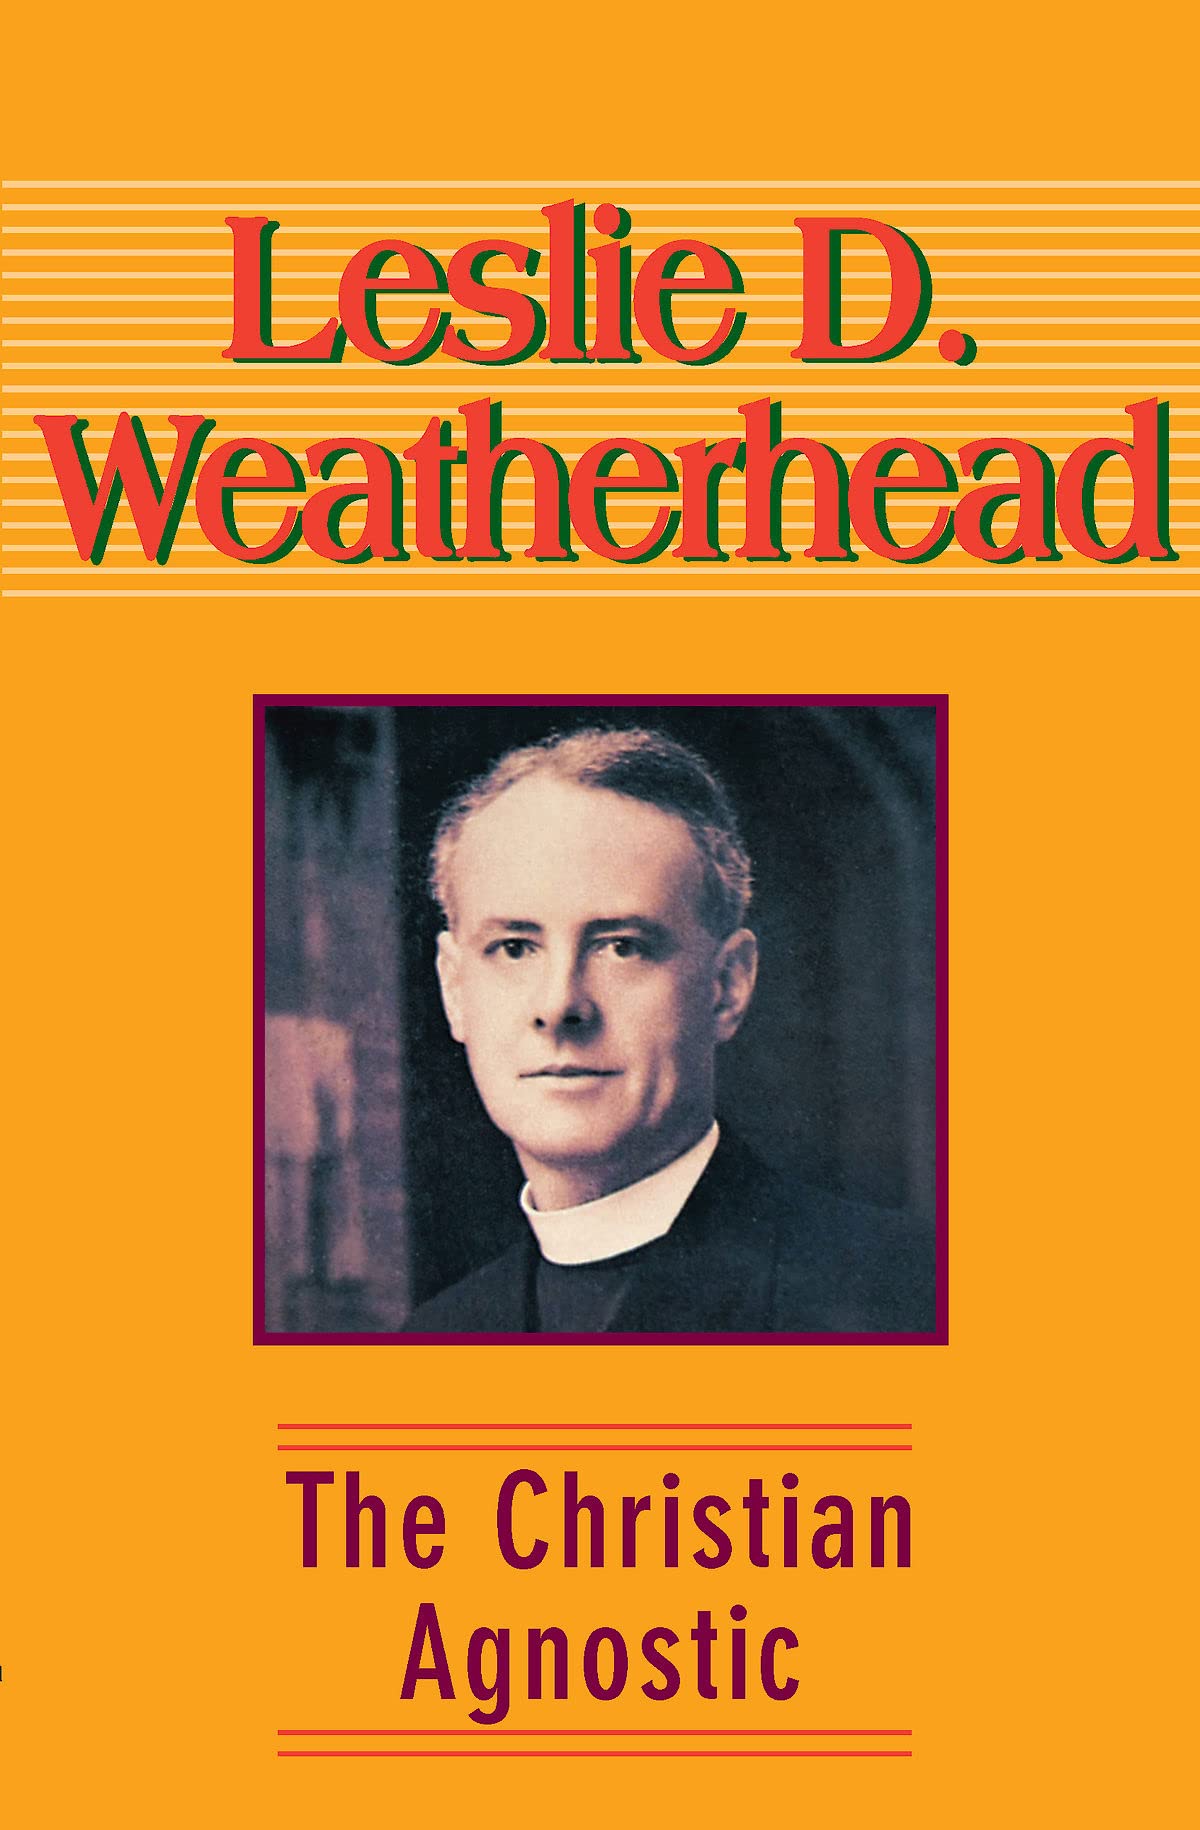 The Christian Agnostic by Leslie D. Weatherhead